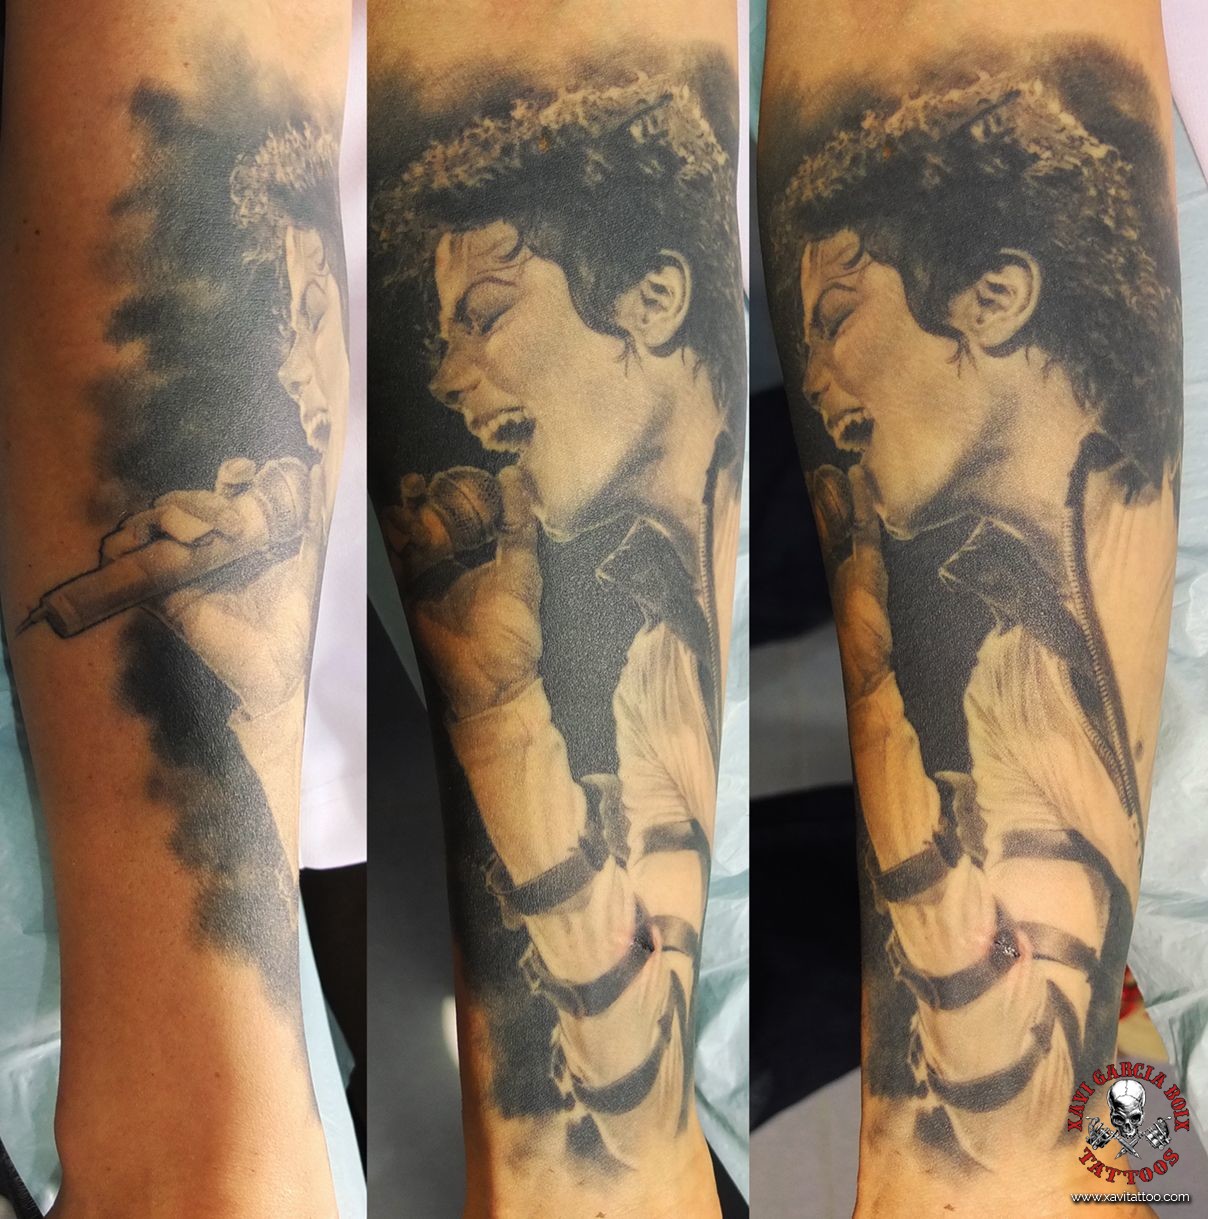 xavi garcia boix tattoo retrato realismo portrait realism tatuaje valencia tatuajes personajes famosos famous characters MICHAEL-JACKSON-04